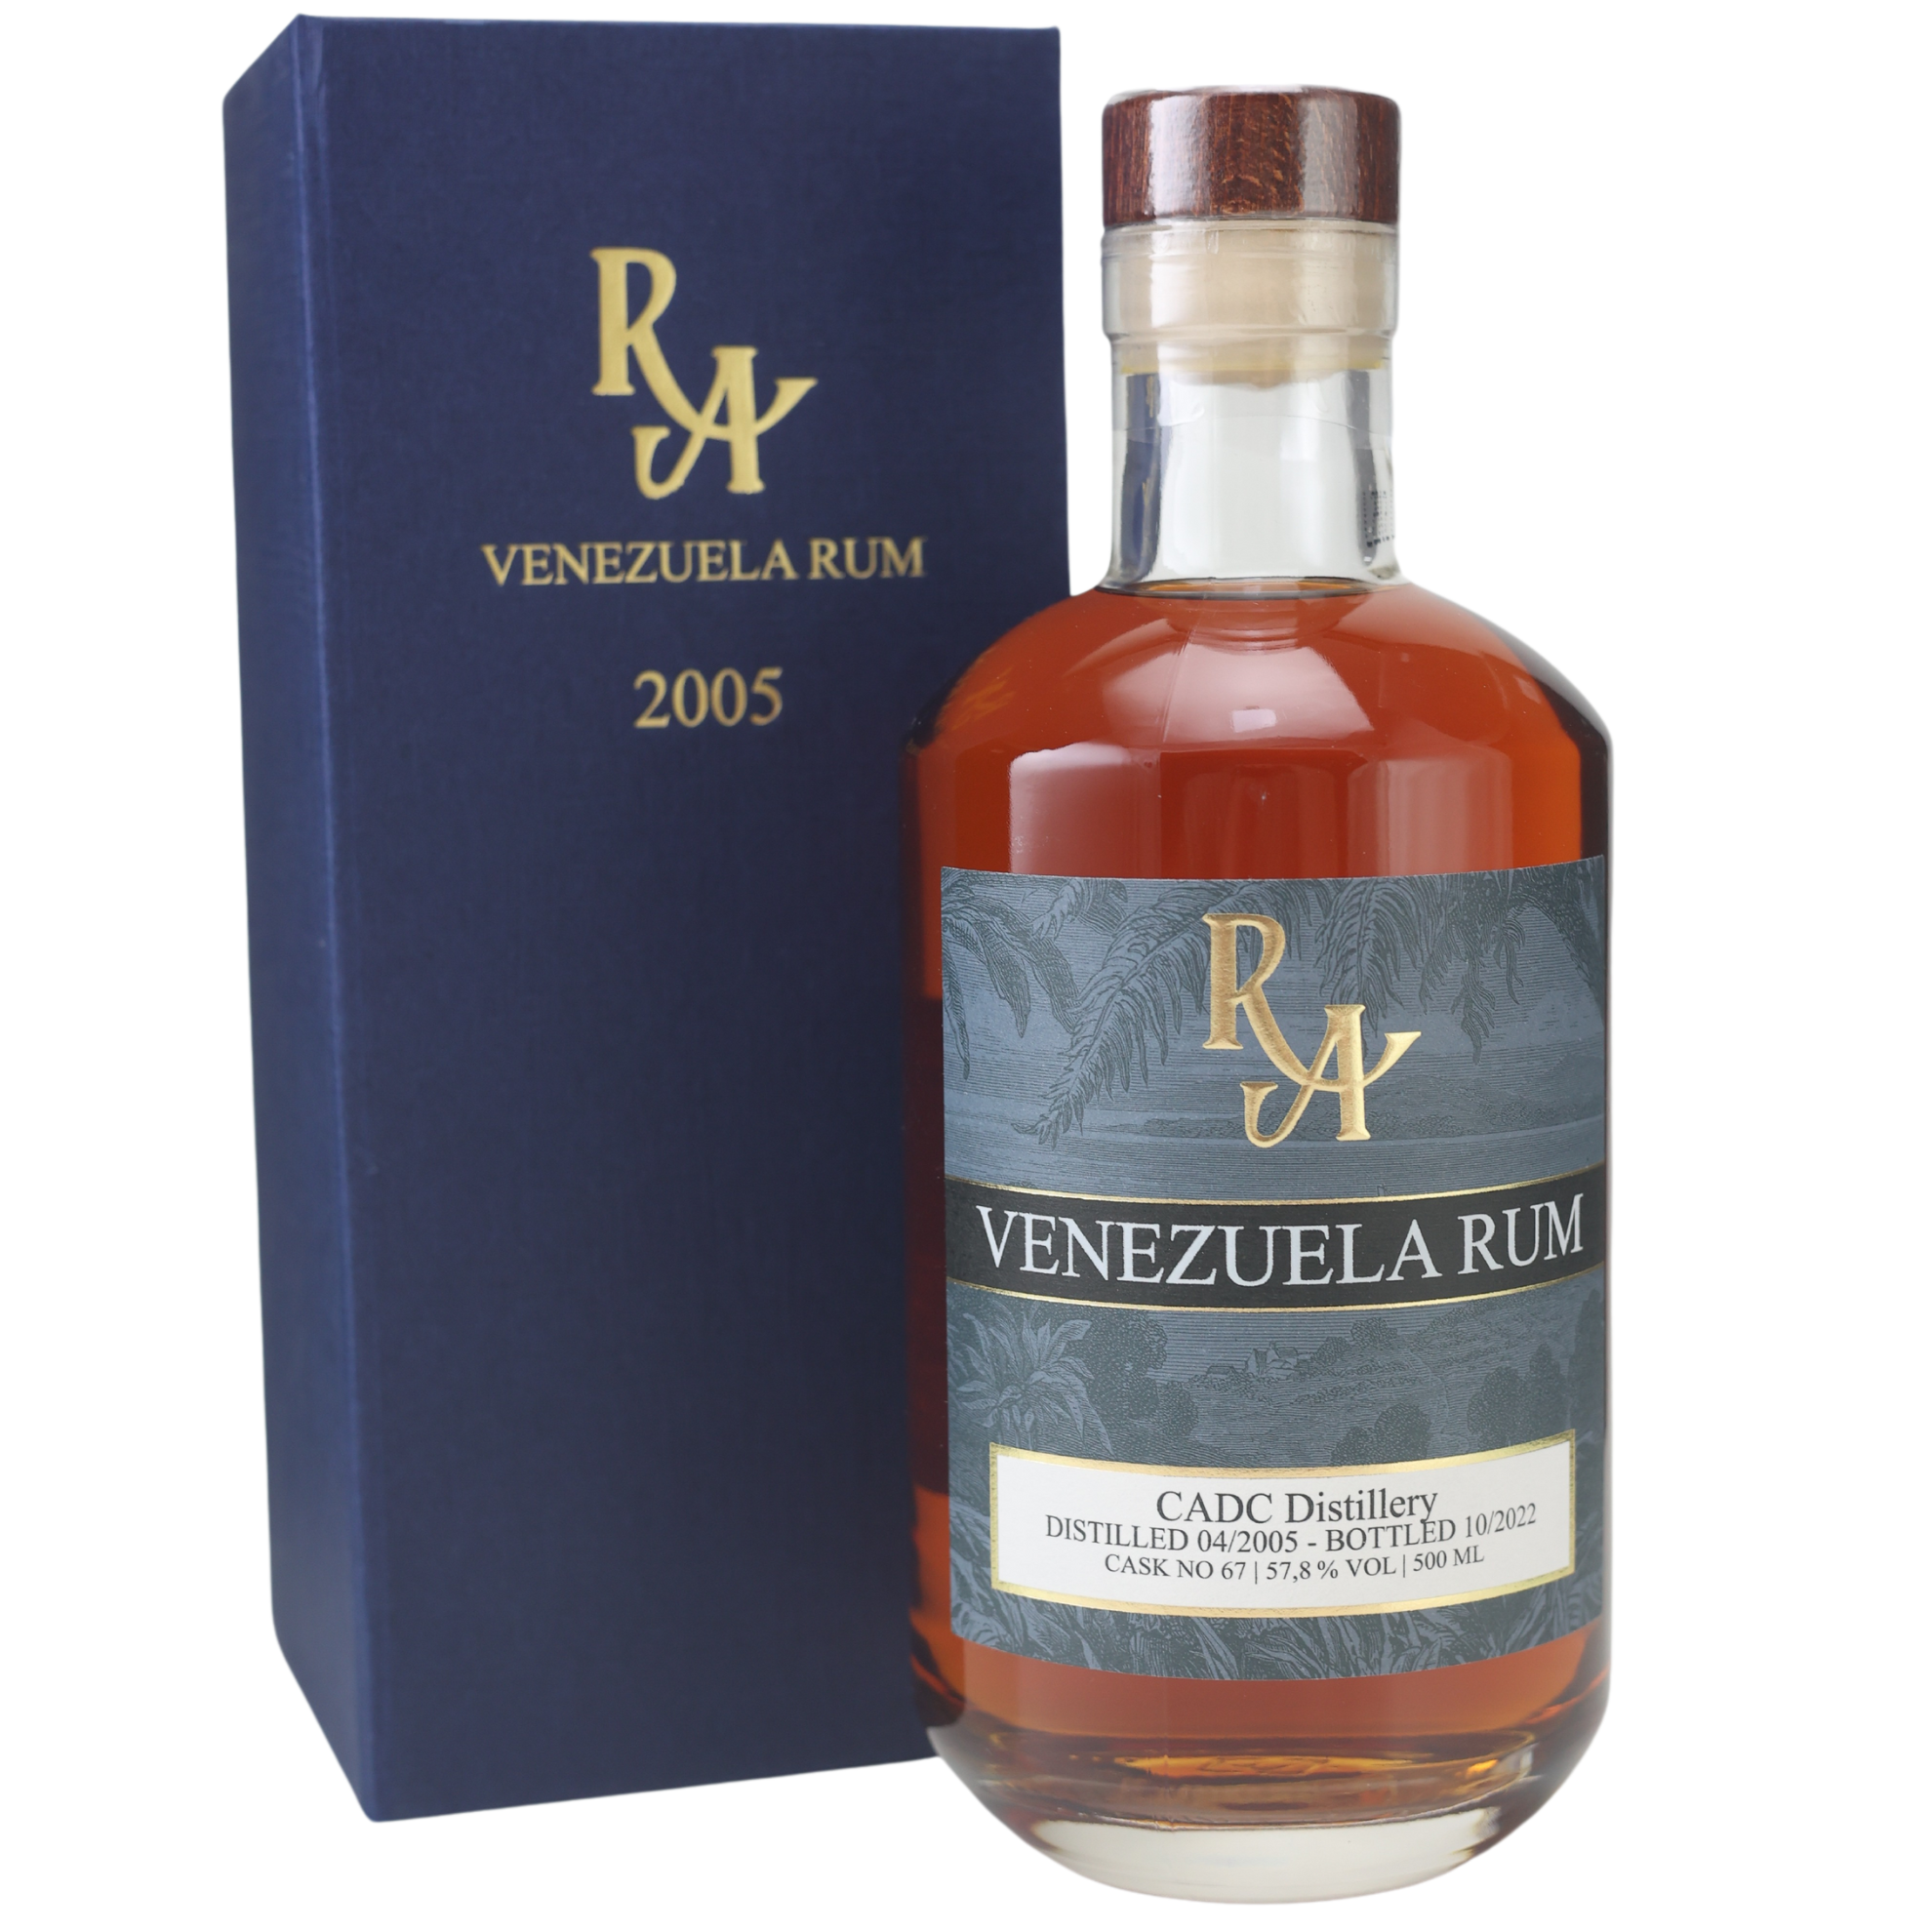 Rum Artesanal Venezuela CACD Distillery 2005 Rum 57,8% 0,5l